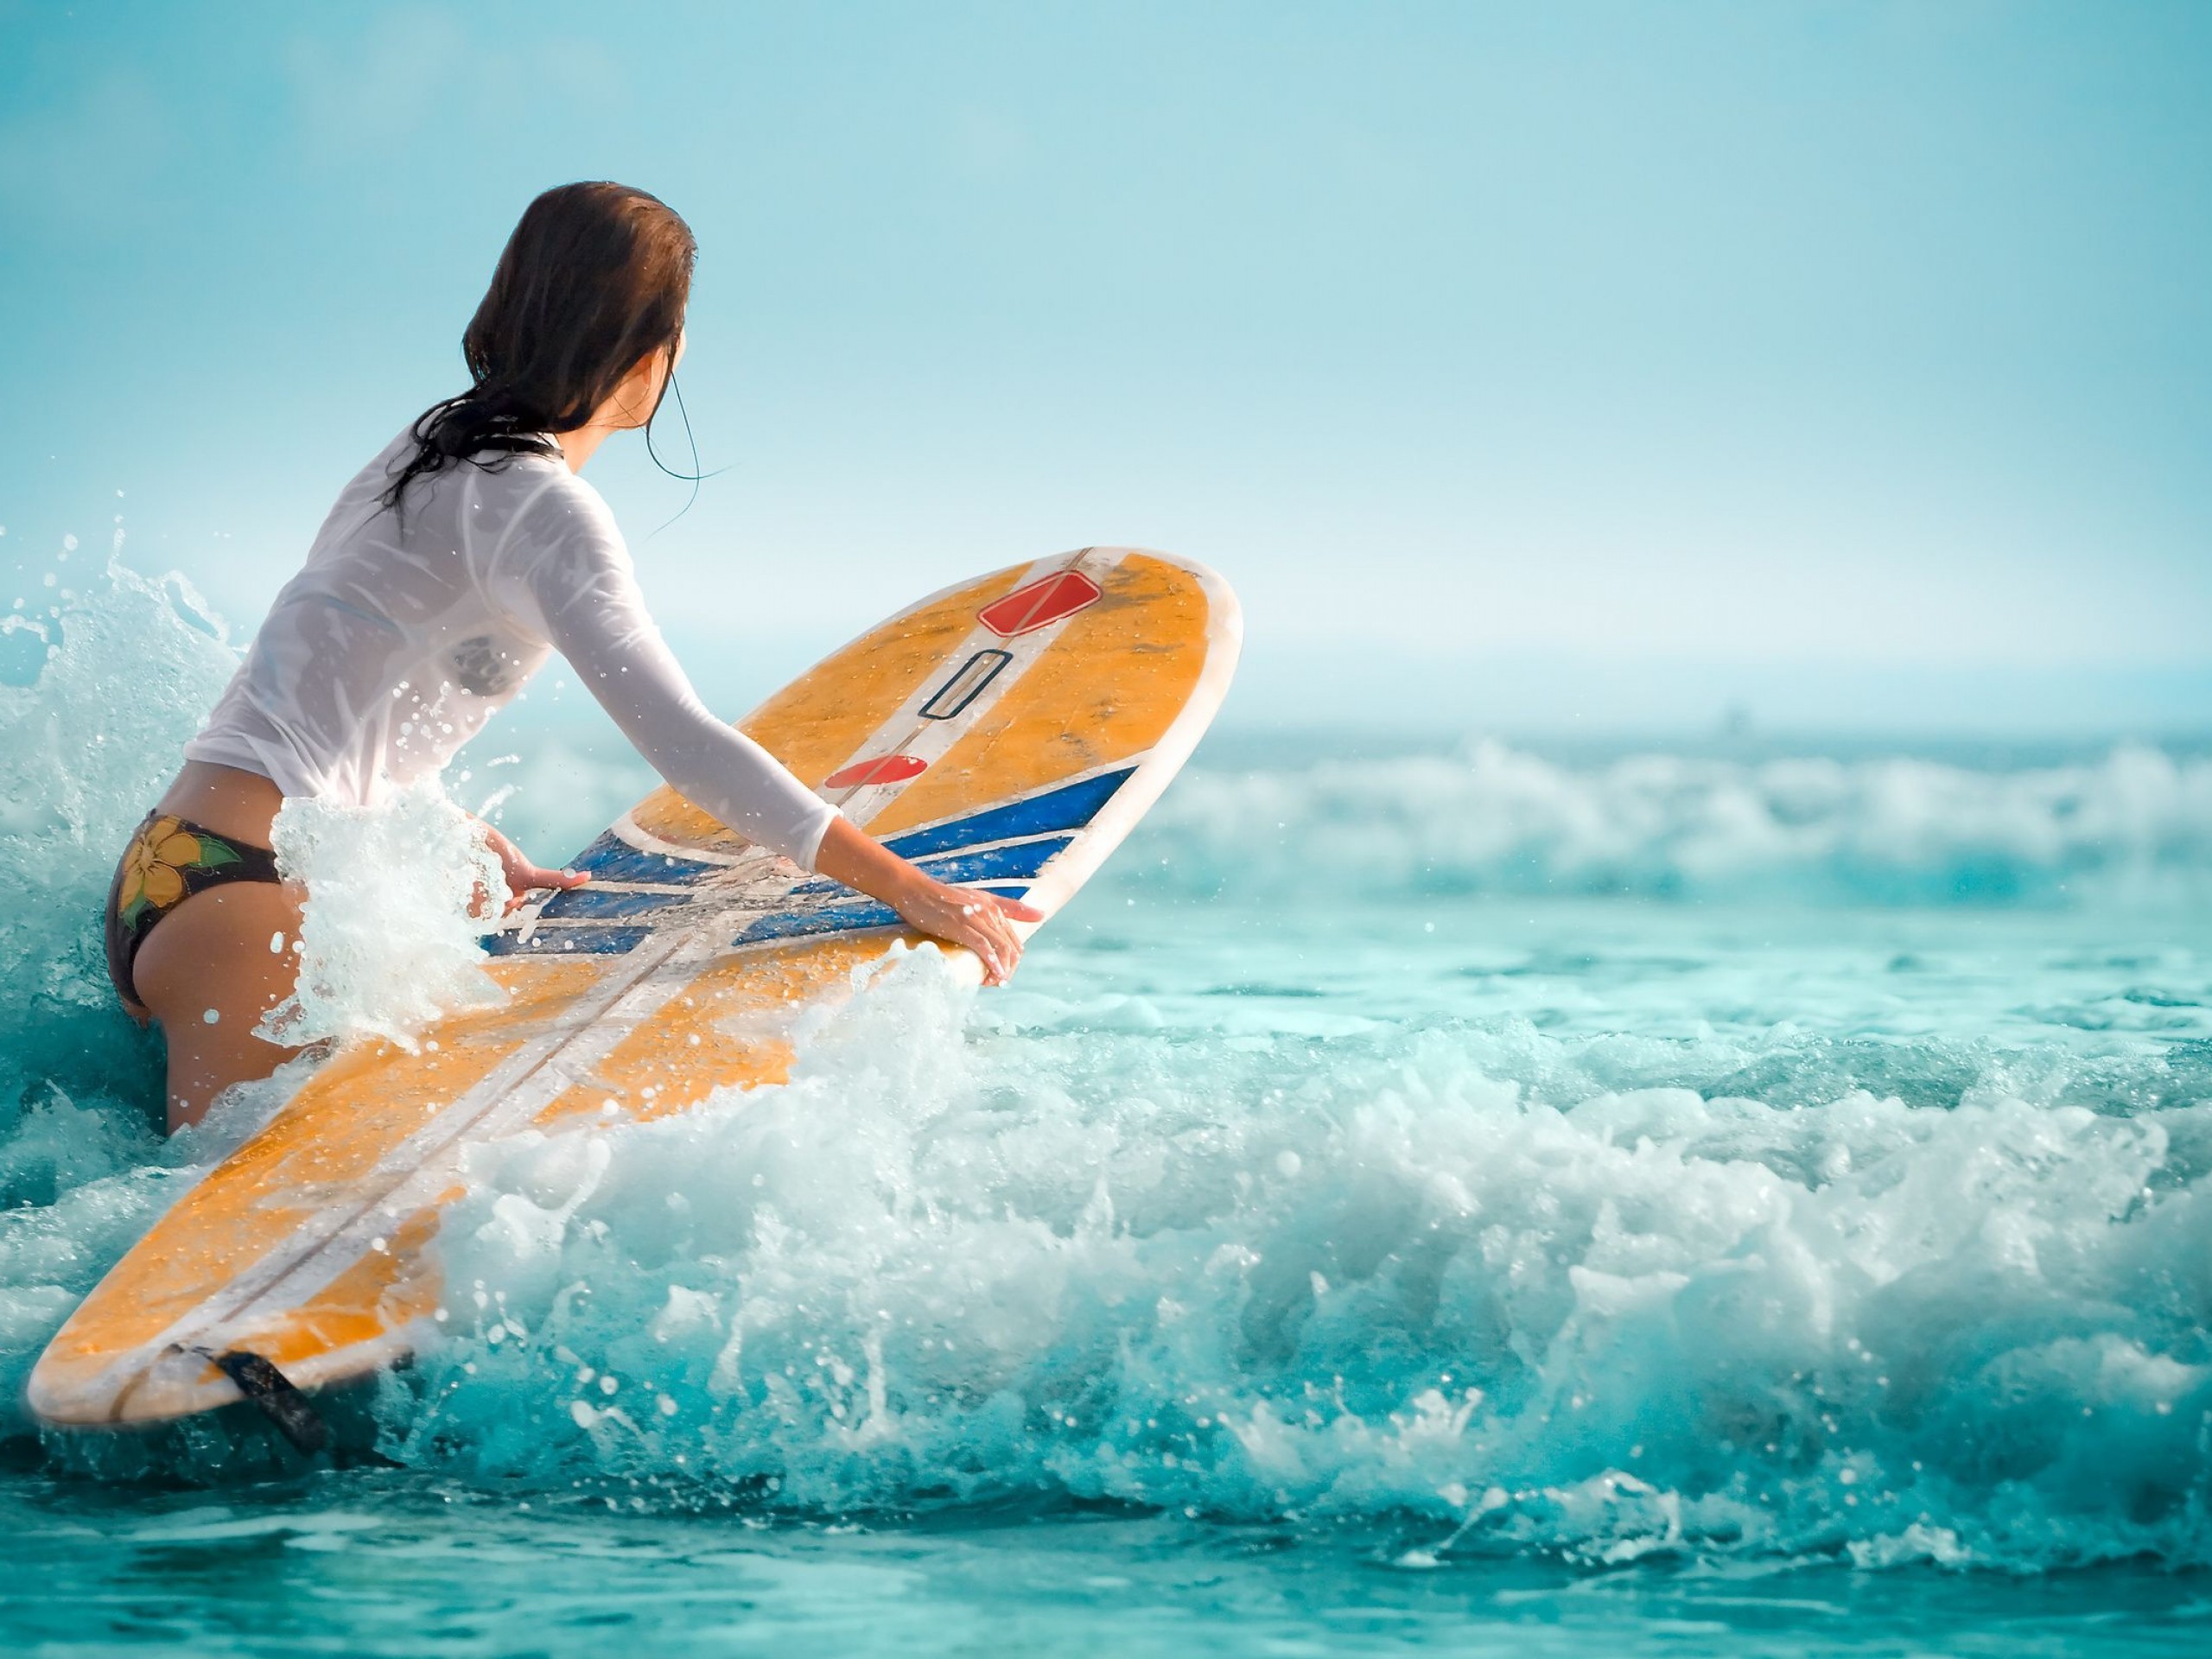 Newest Mobile Wallpaper Surfboard